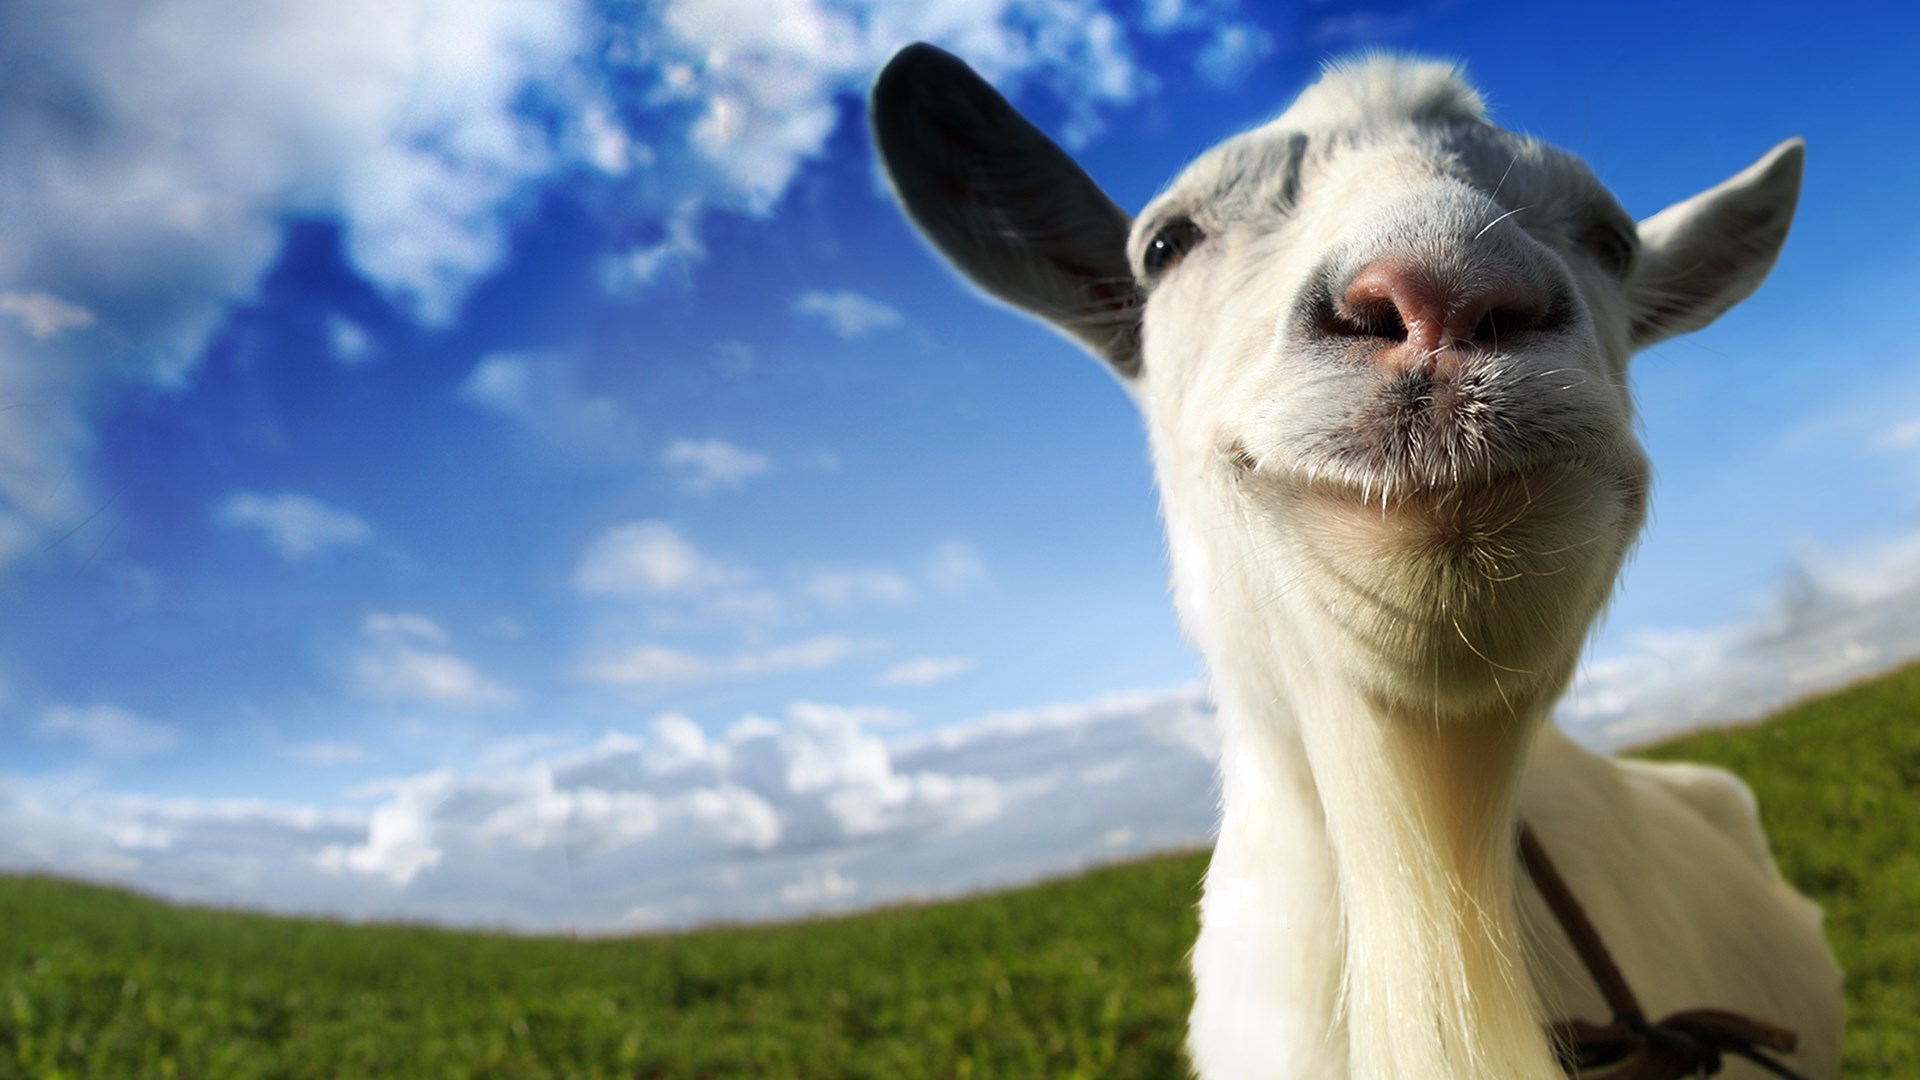 goat simulator free windows vista